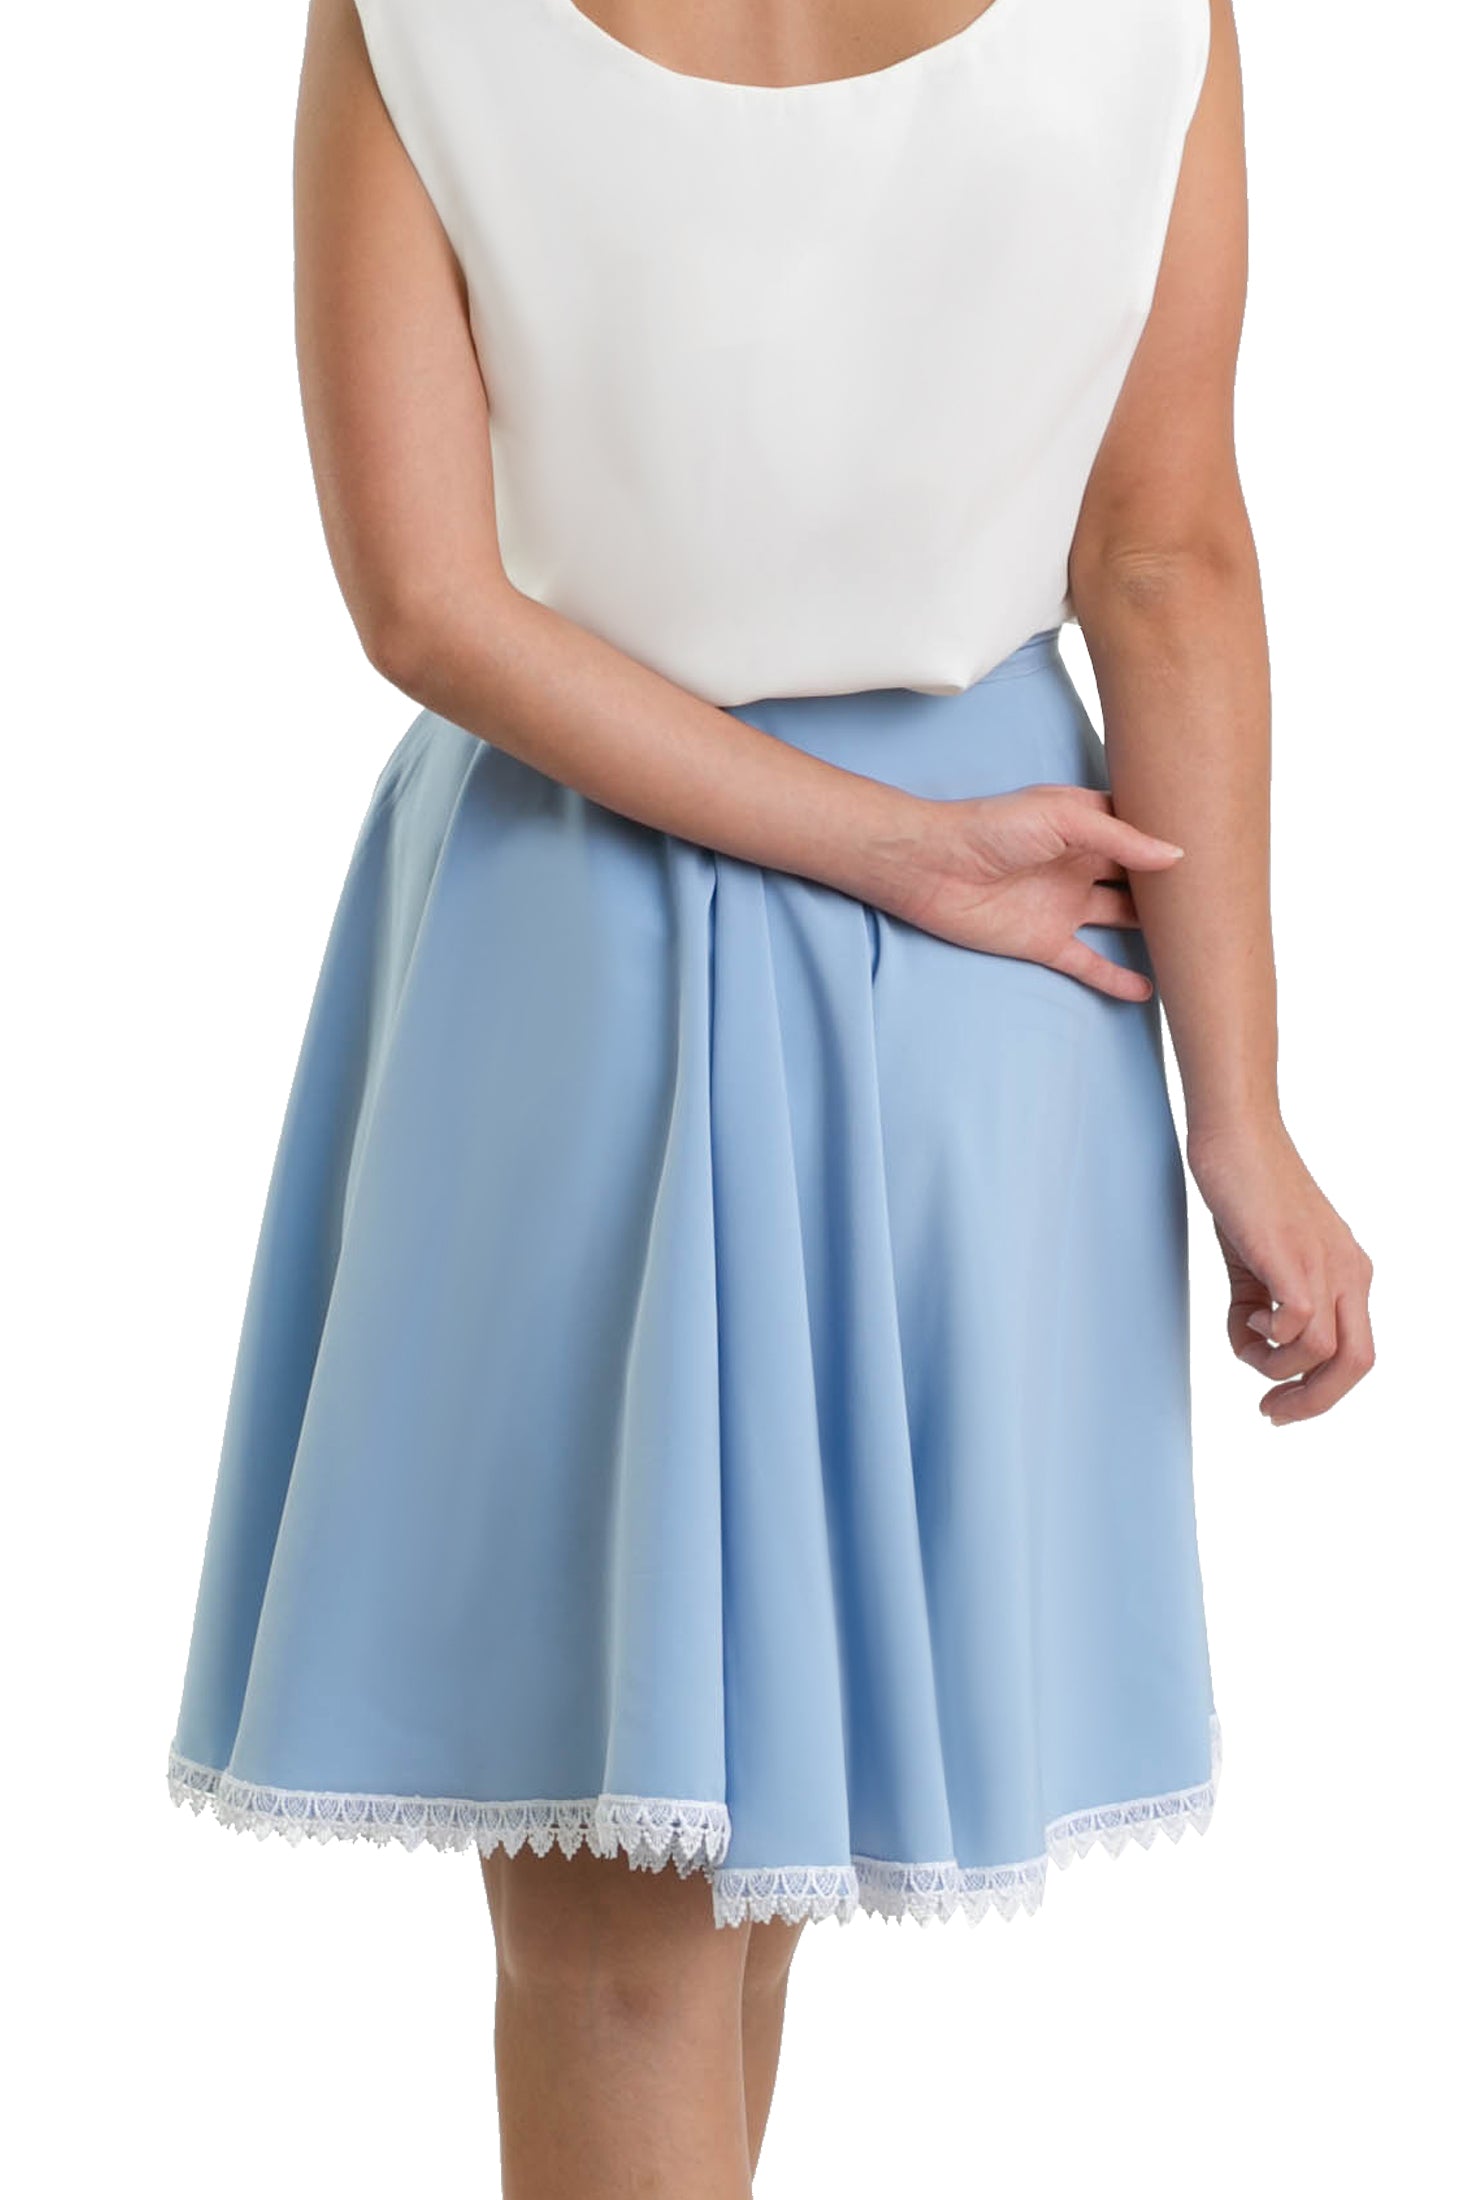 The Mini-Semi circular Skirt - Baby Blue